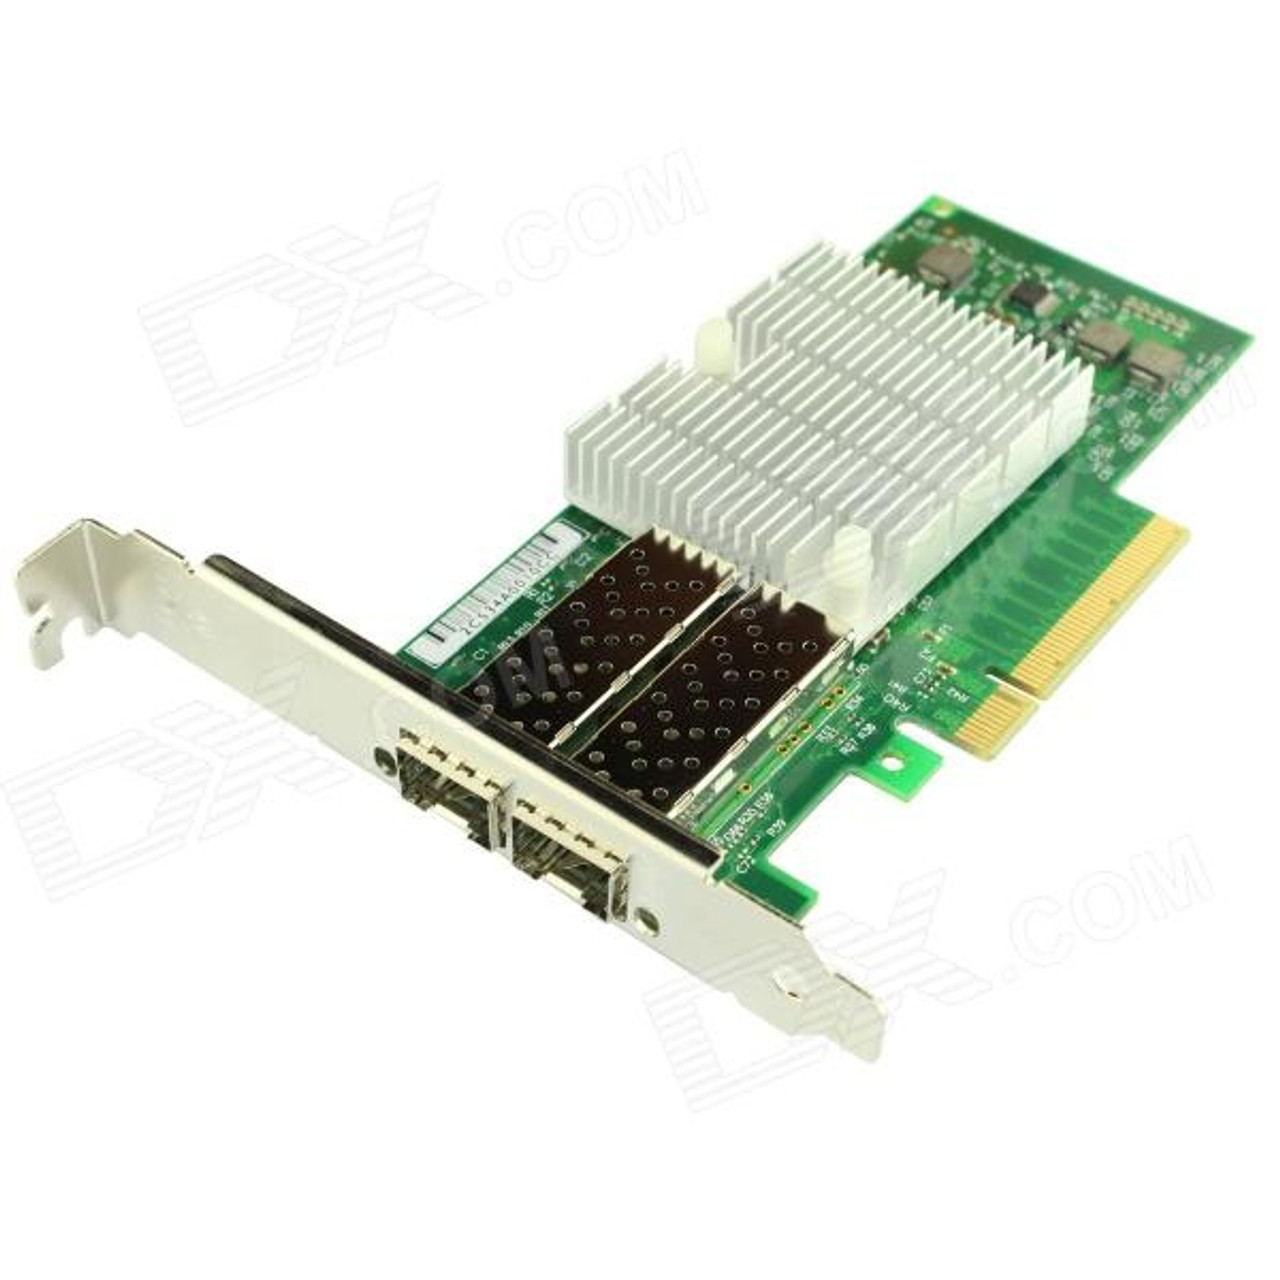 718202-B21 - HP Lpe1605 16GB Dual Port PCI-Express Fibre Channel Mezzanine Host Bus Adapter